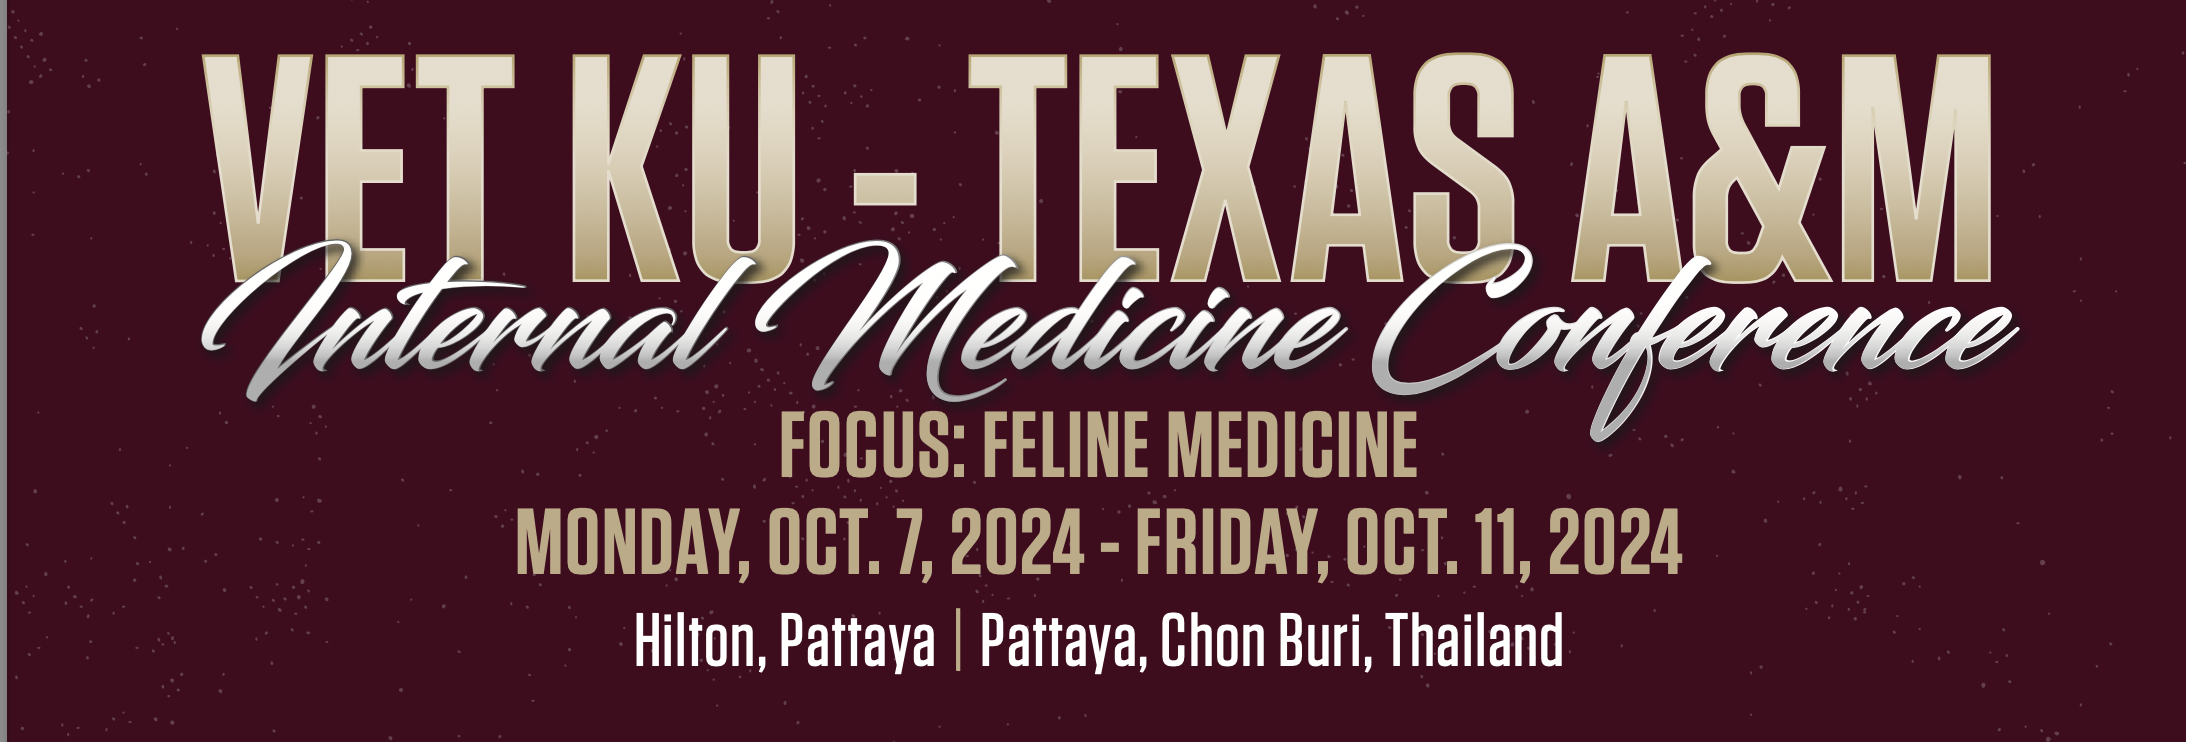 VET-KU Texas A&amp;M Internal Medicine Conference